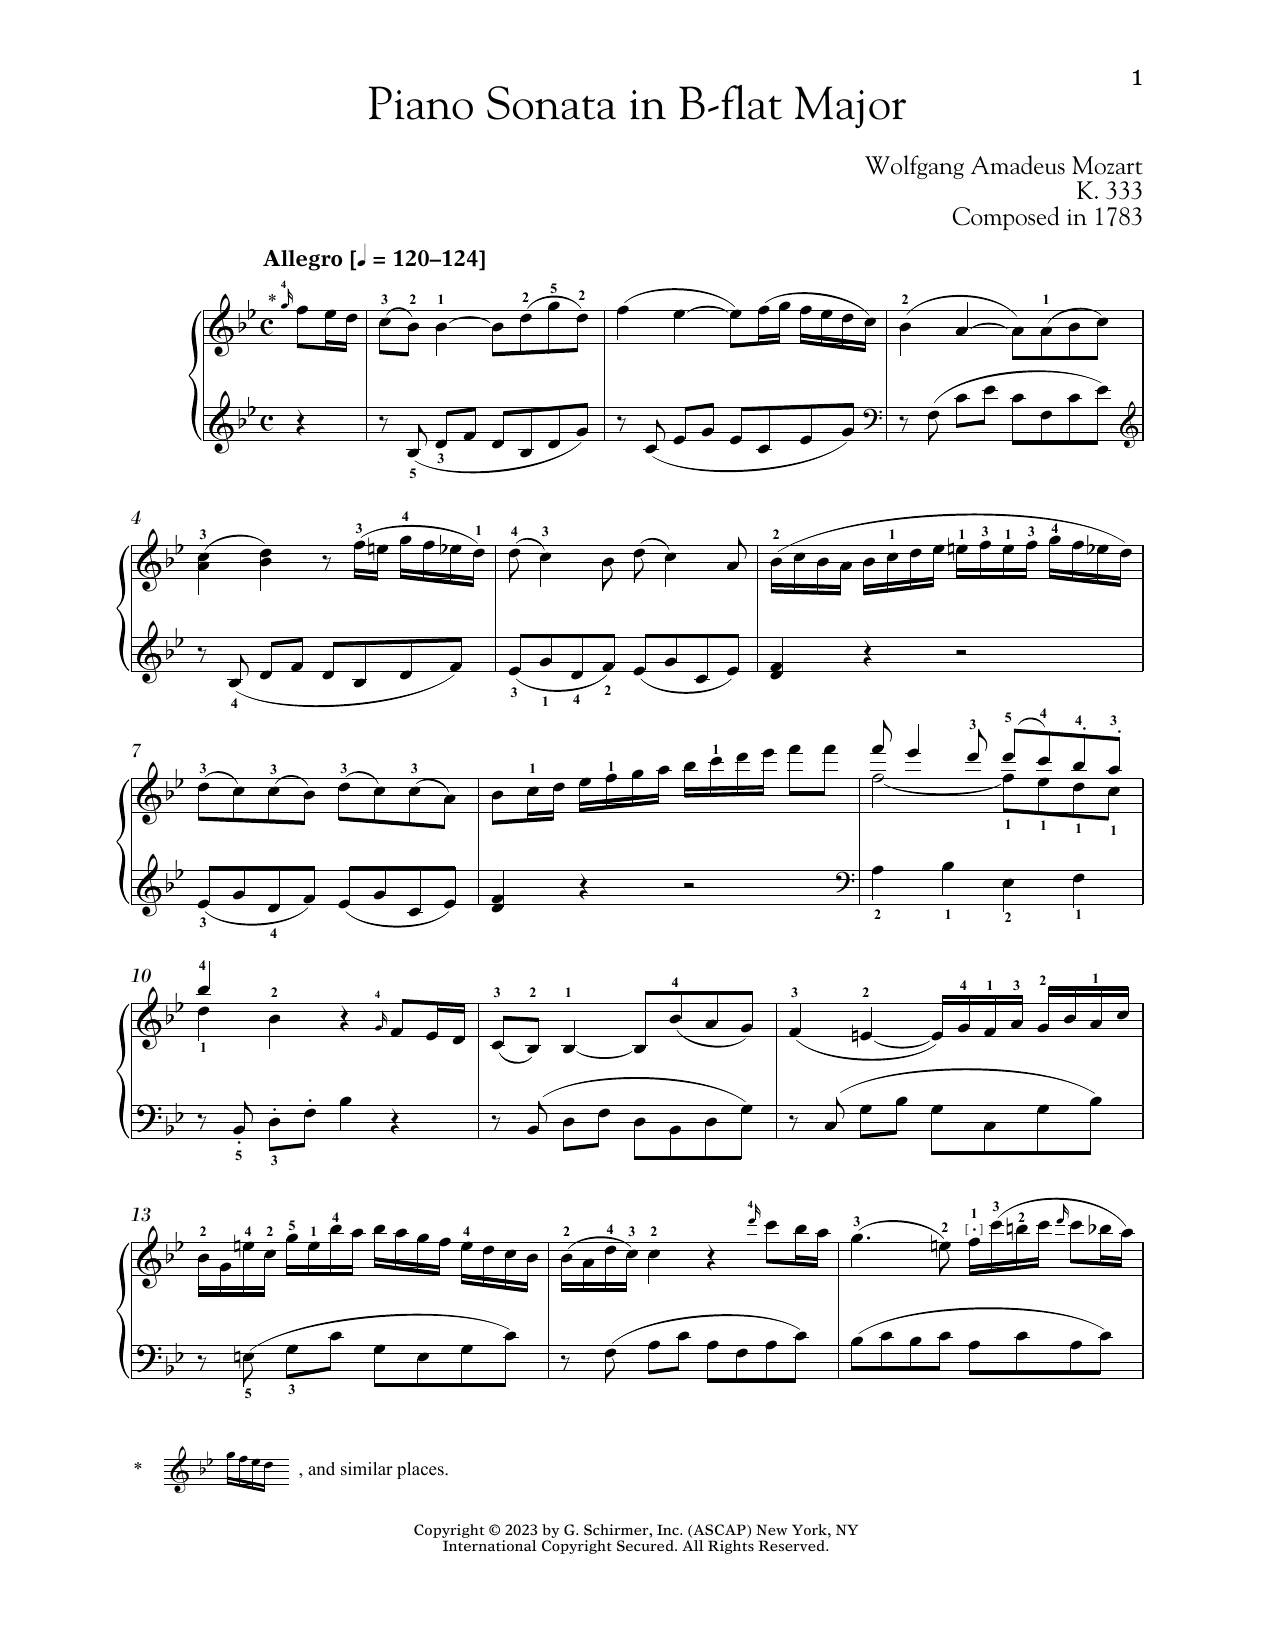 Wolfgang Amadeus Mozart Piano Sonata In B-flat Major, K. 333 Sheet Music Notes & Chords for Piano Solo - Download or Print PDF